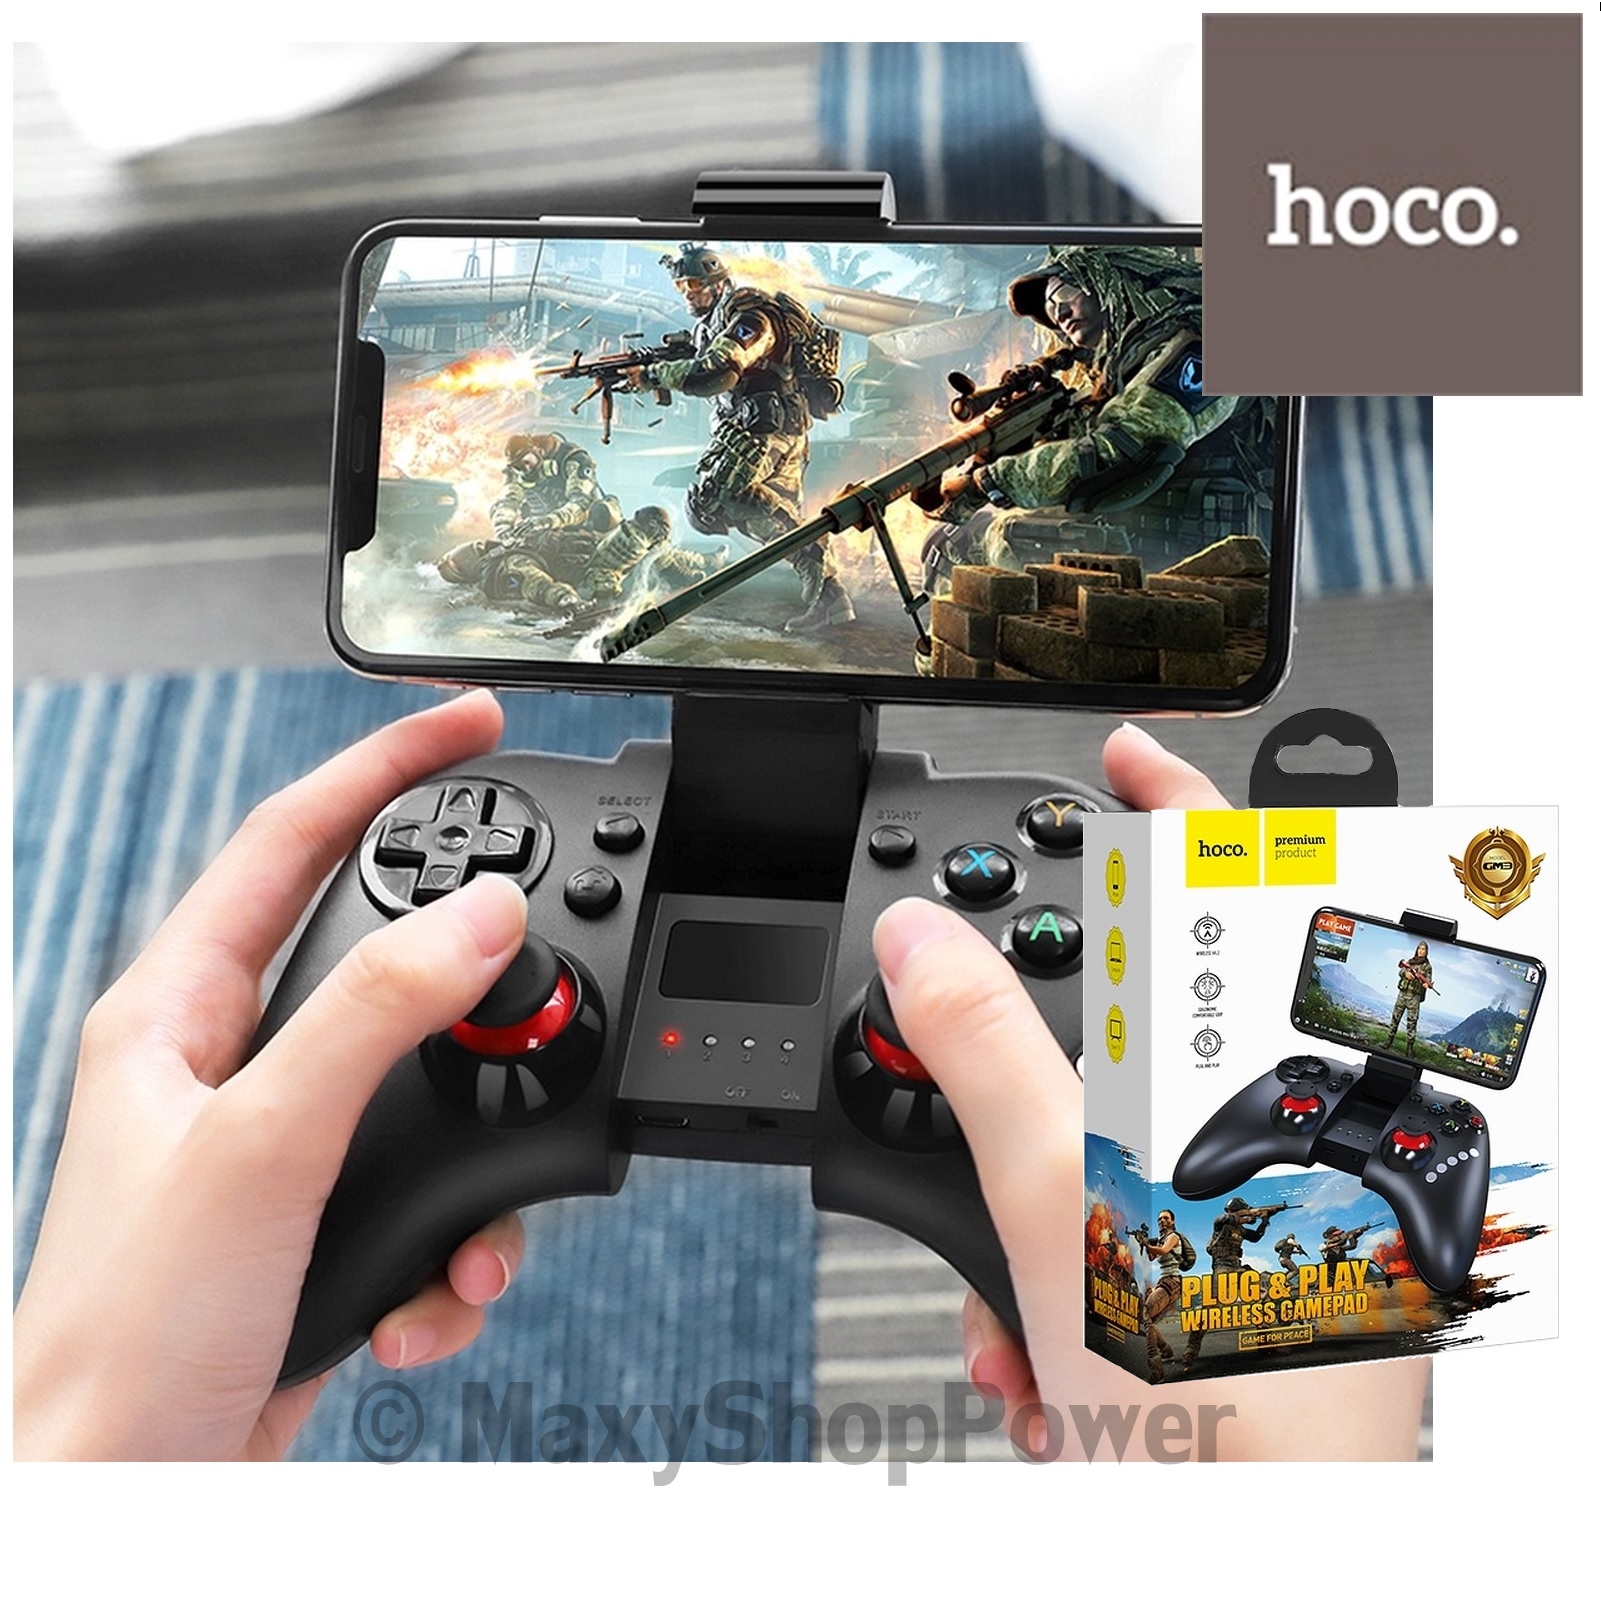 HOCO GAME PAD ORIGINALE BLUETOOTH REMOTE CONTROLLER JOYSTICK PER SMARTPHONE ANDROID BLACK